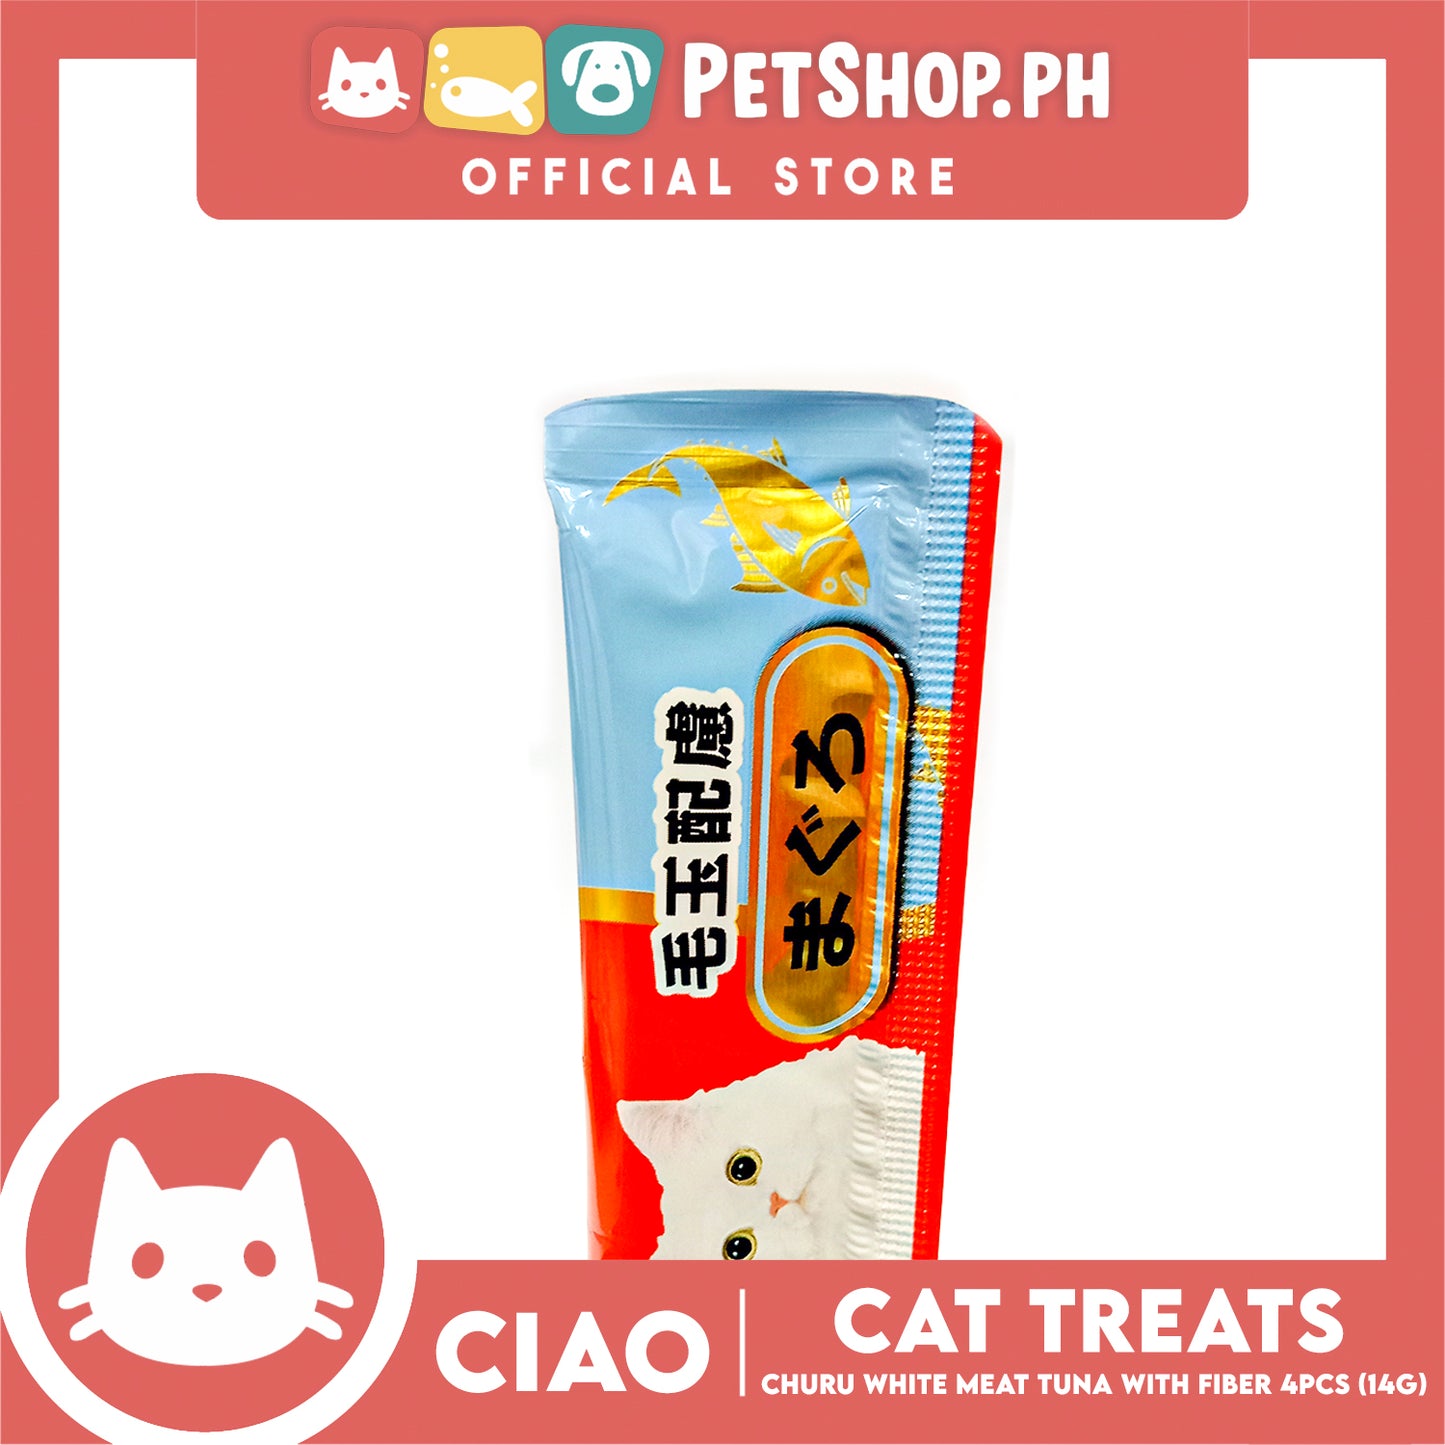 Ciao Churu White Meat Tuna With Fiber Flavor (SC-101) Creamy Cat Treats 14g x 4pcs